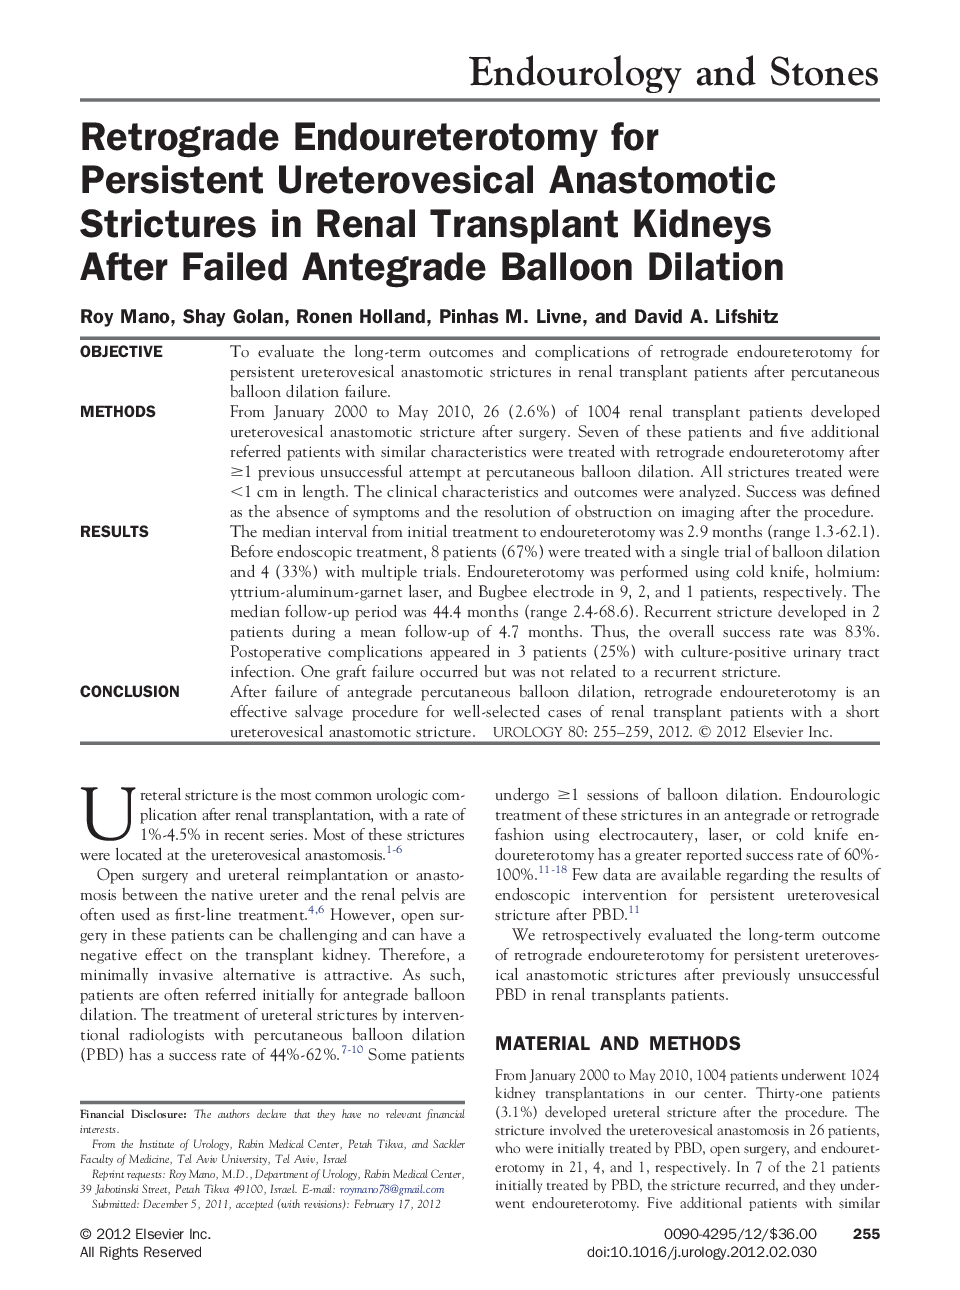 Retrograde Endoureterotomy for Persistent Ureterovesical Anastomotic Strictures in Renal Transplant Kidneys After Failed Antegrade Balloon Dilation